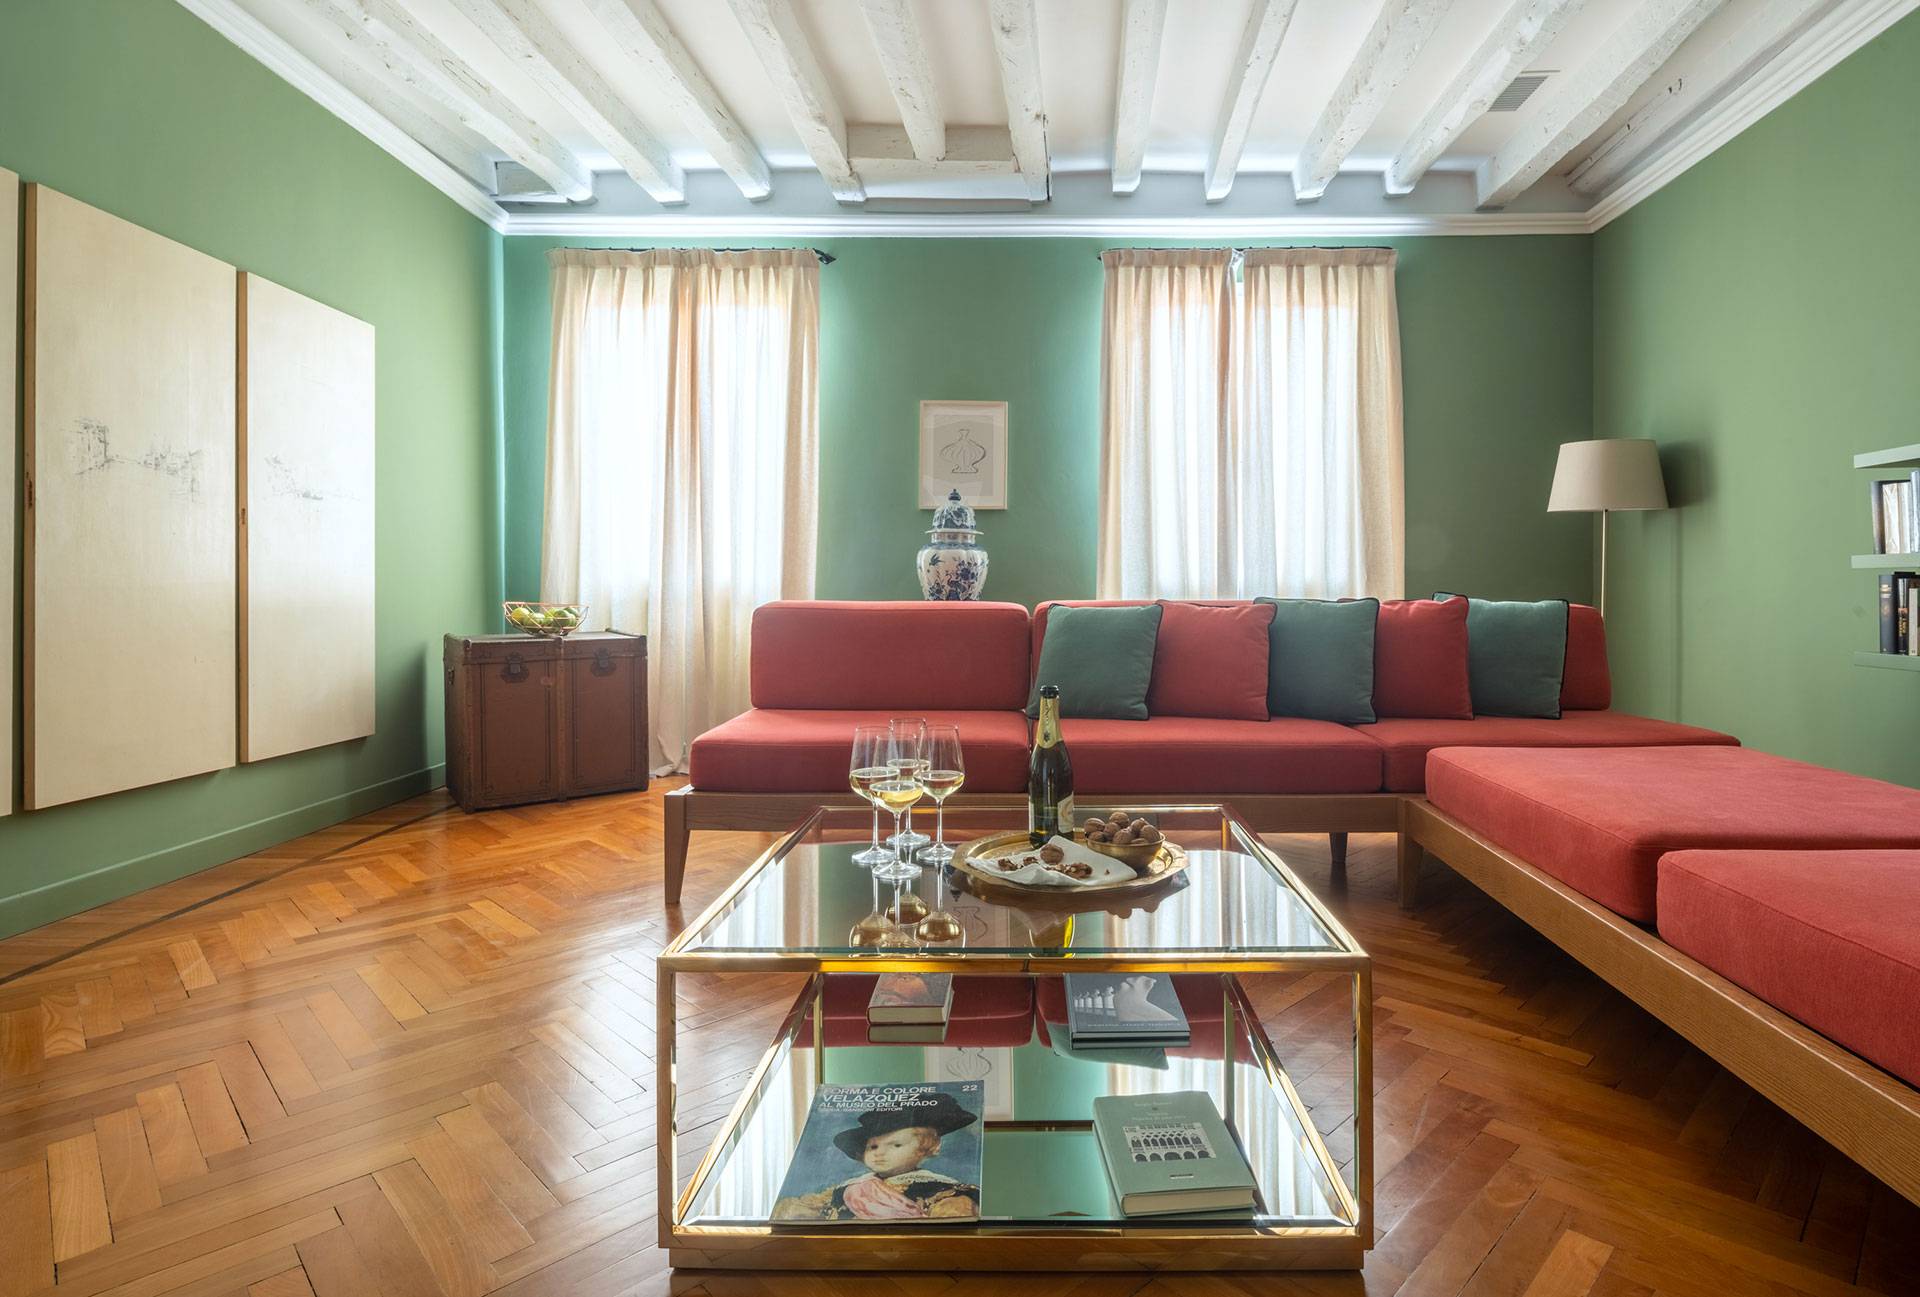 privacy and quietness are guaranteed at the Verdi apartment